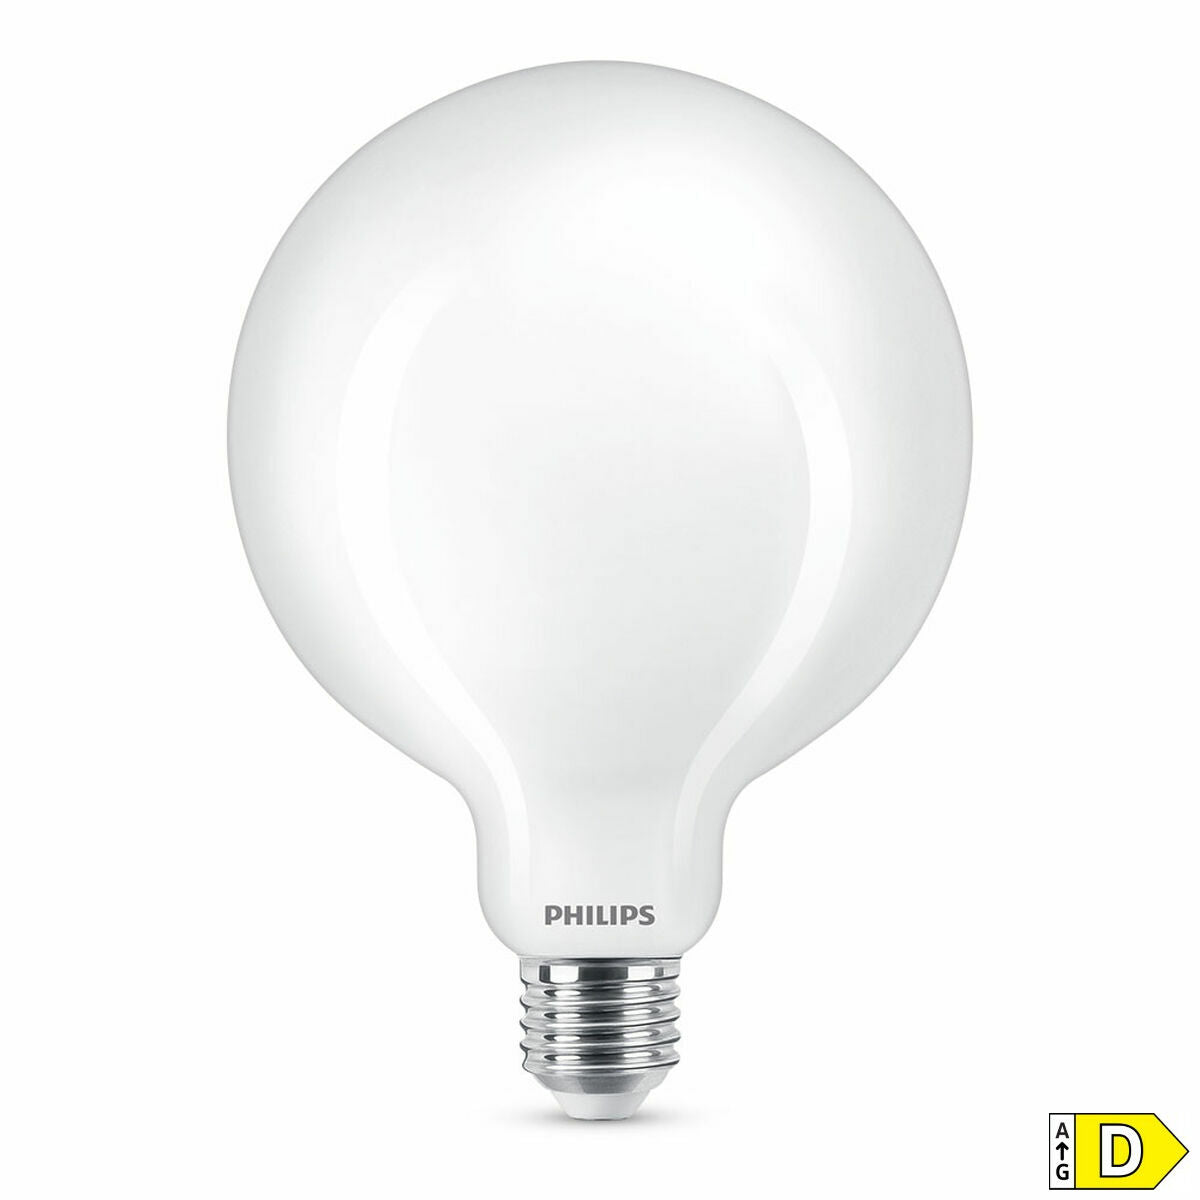 Ledlamp Philips D 13 W E27 2000 Lm 12,4 x 17,7 cm (6500 K)